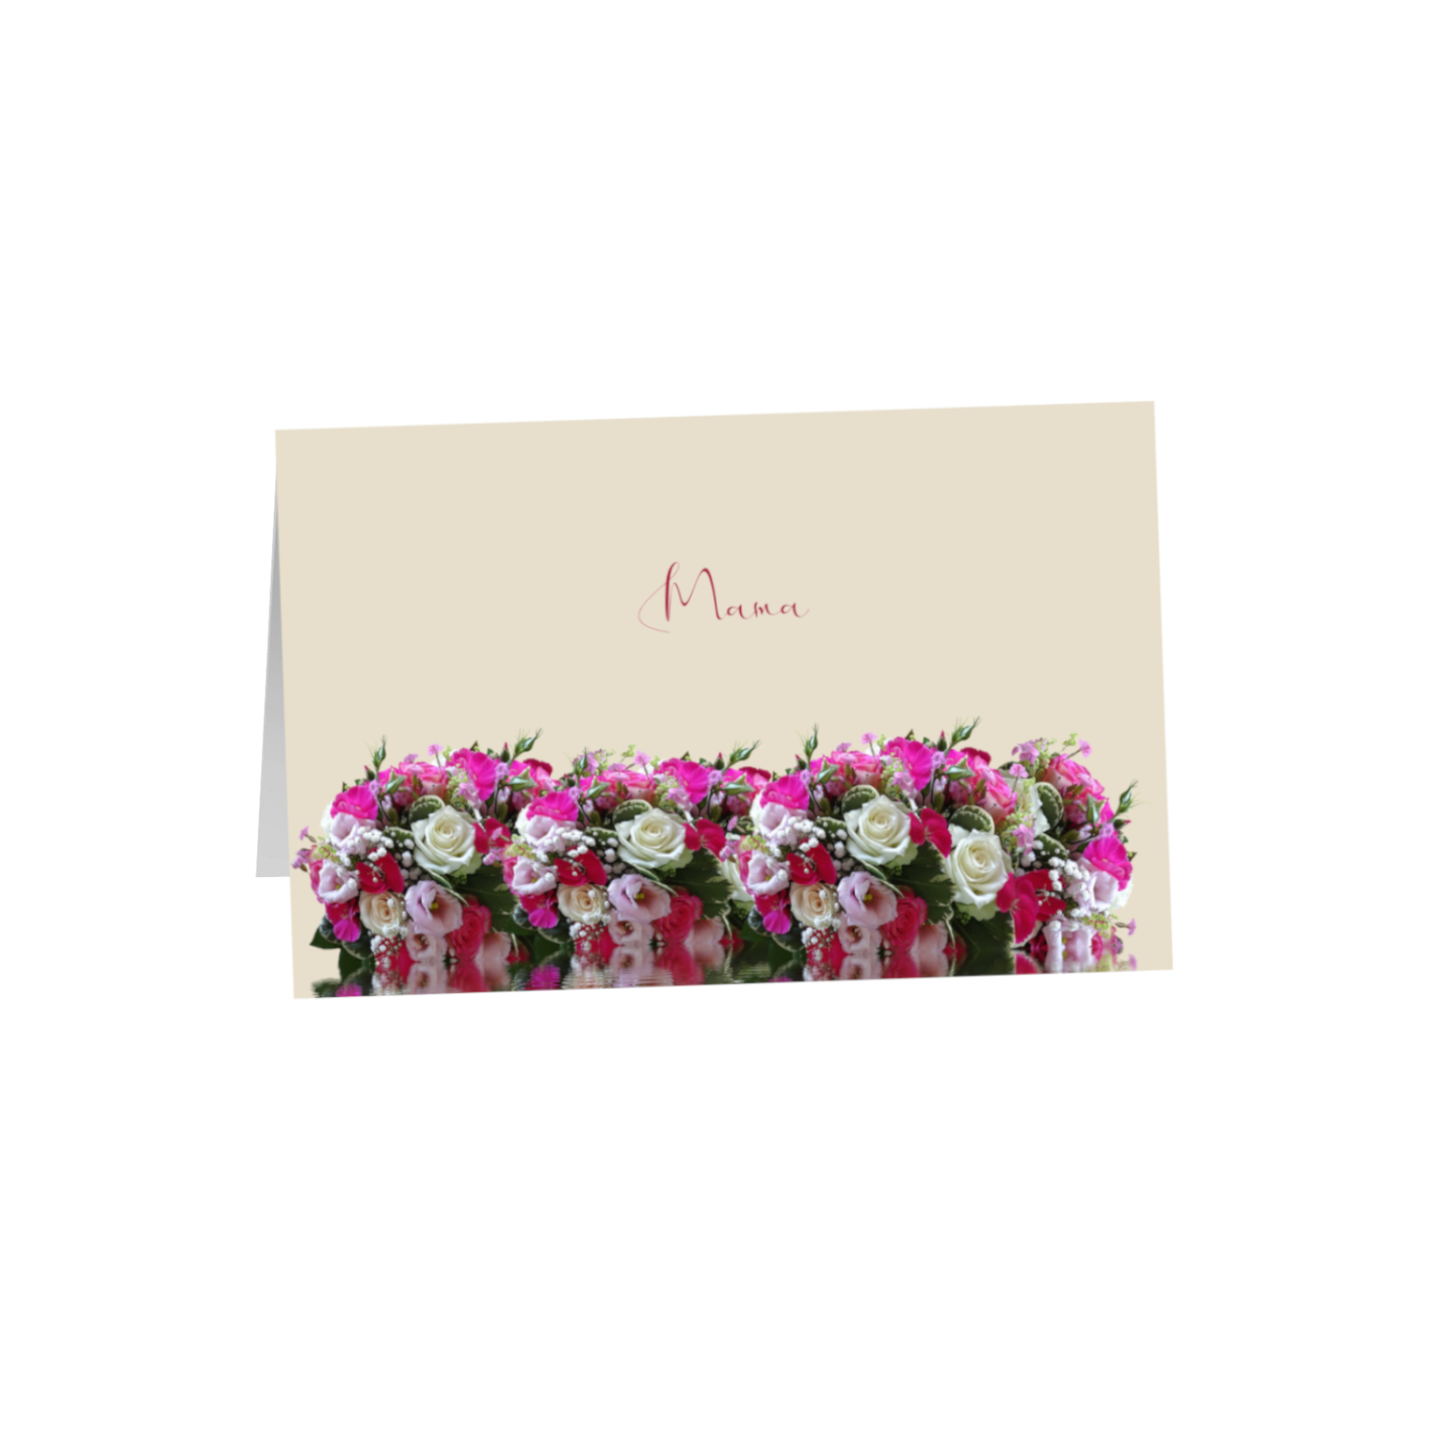 Mama 8.5x5.5 Greeting Card